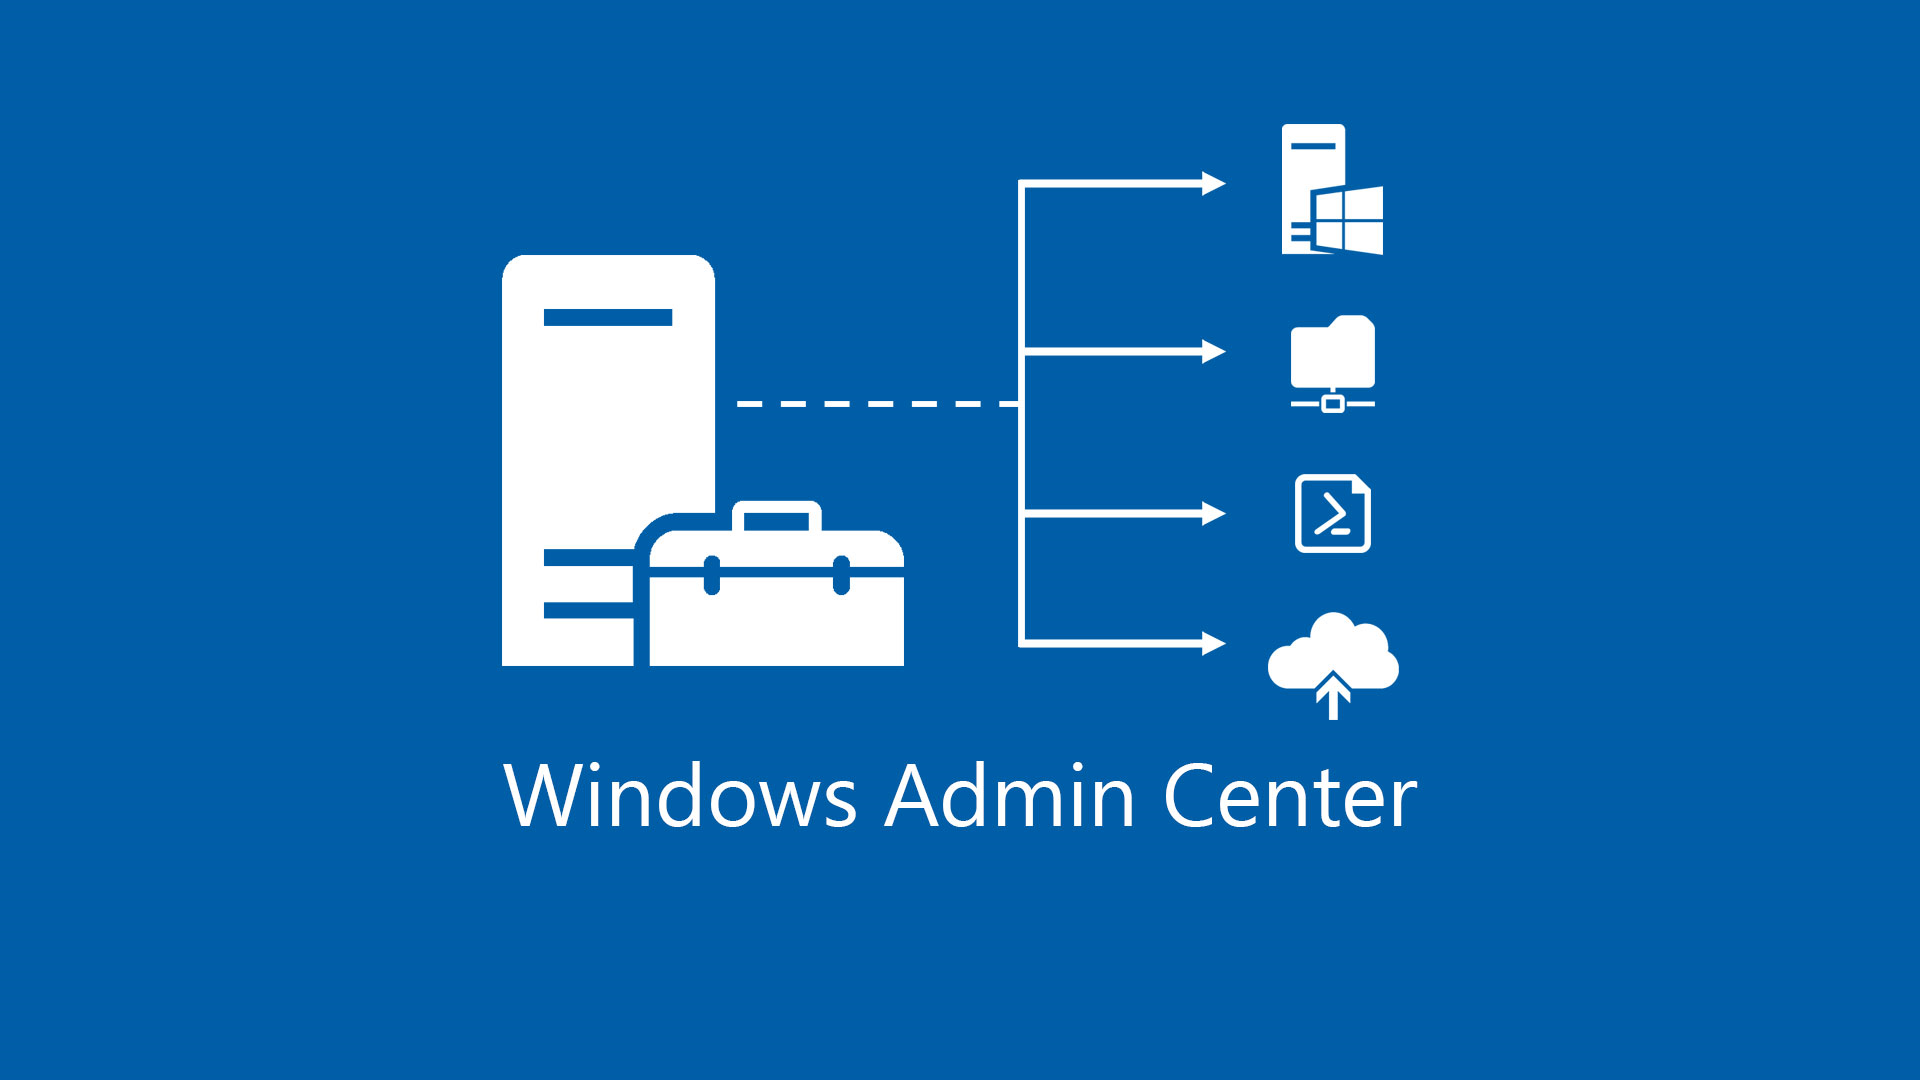 Azure Stack HCI - Part VII - Configure Windows Admin Center Access